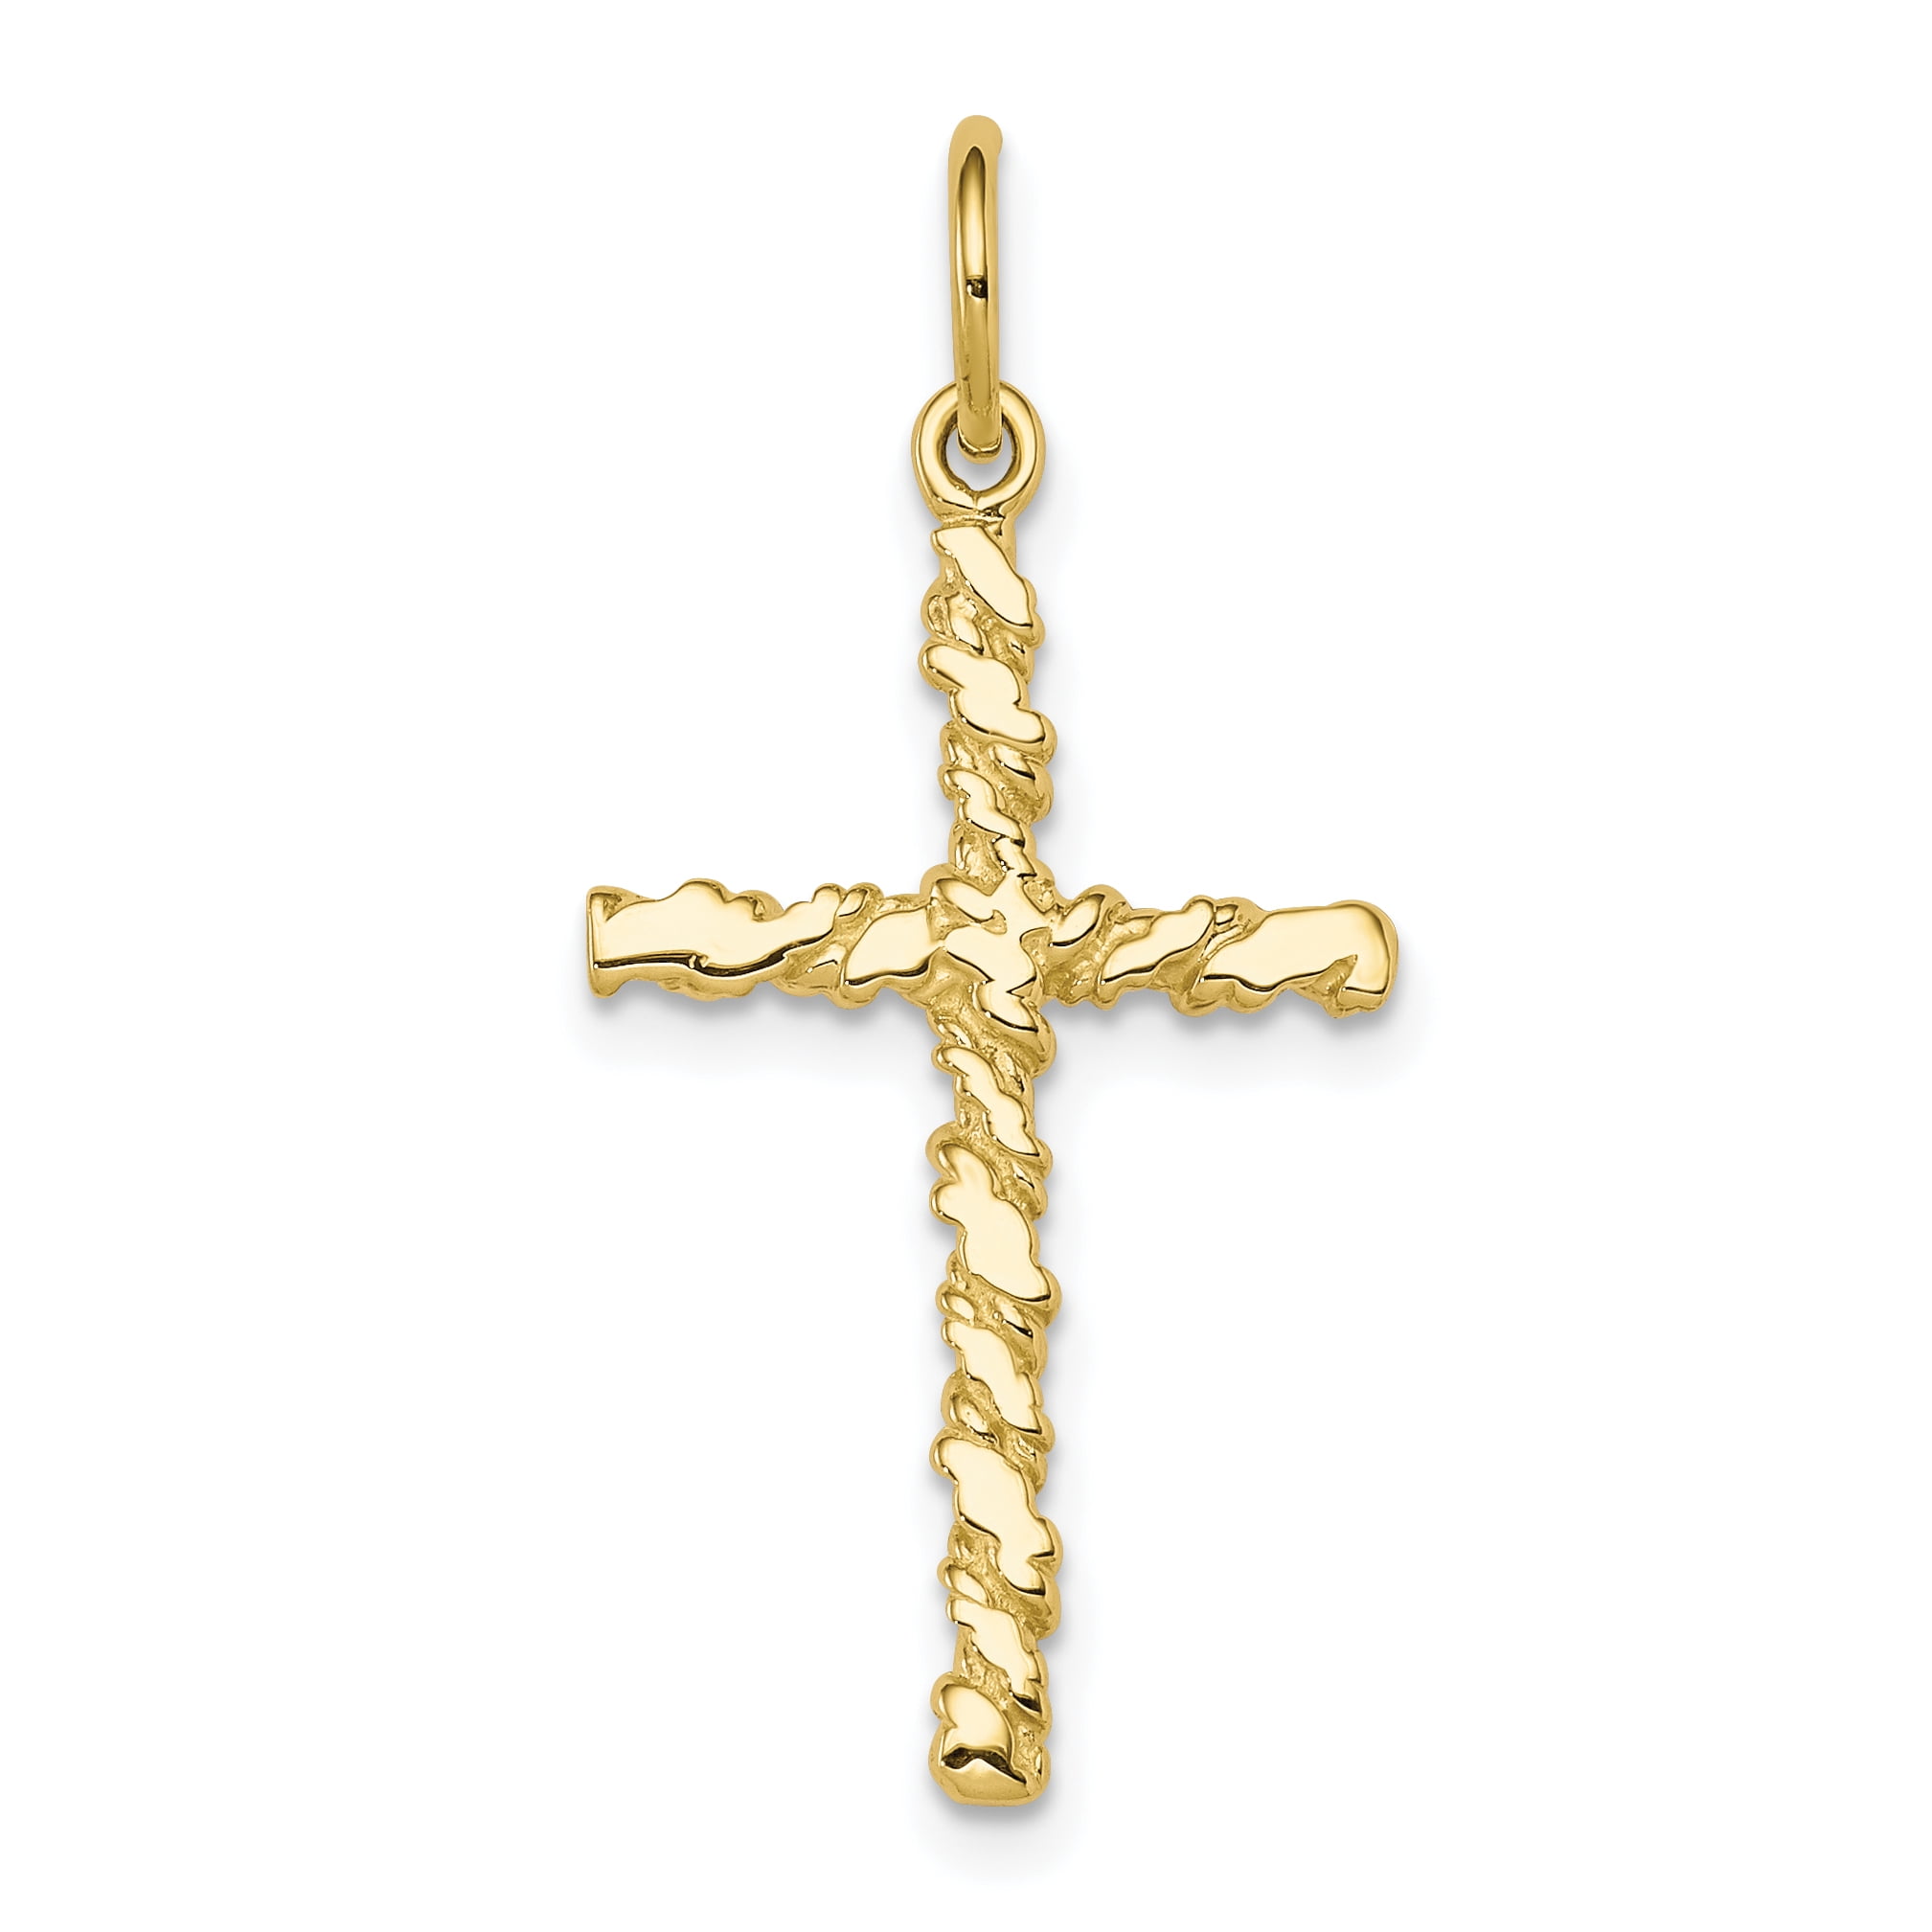 22mm*11mm Fancy 9ct Gold Ladies Cross Pendant with Cubic Zirconia/CZ 